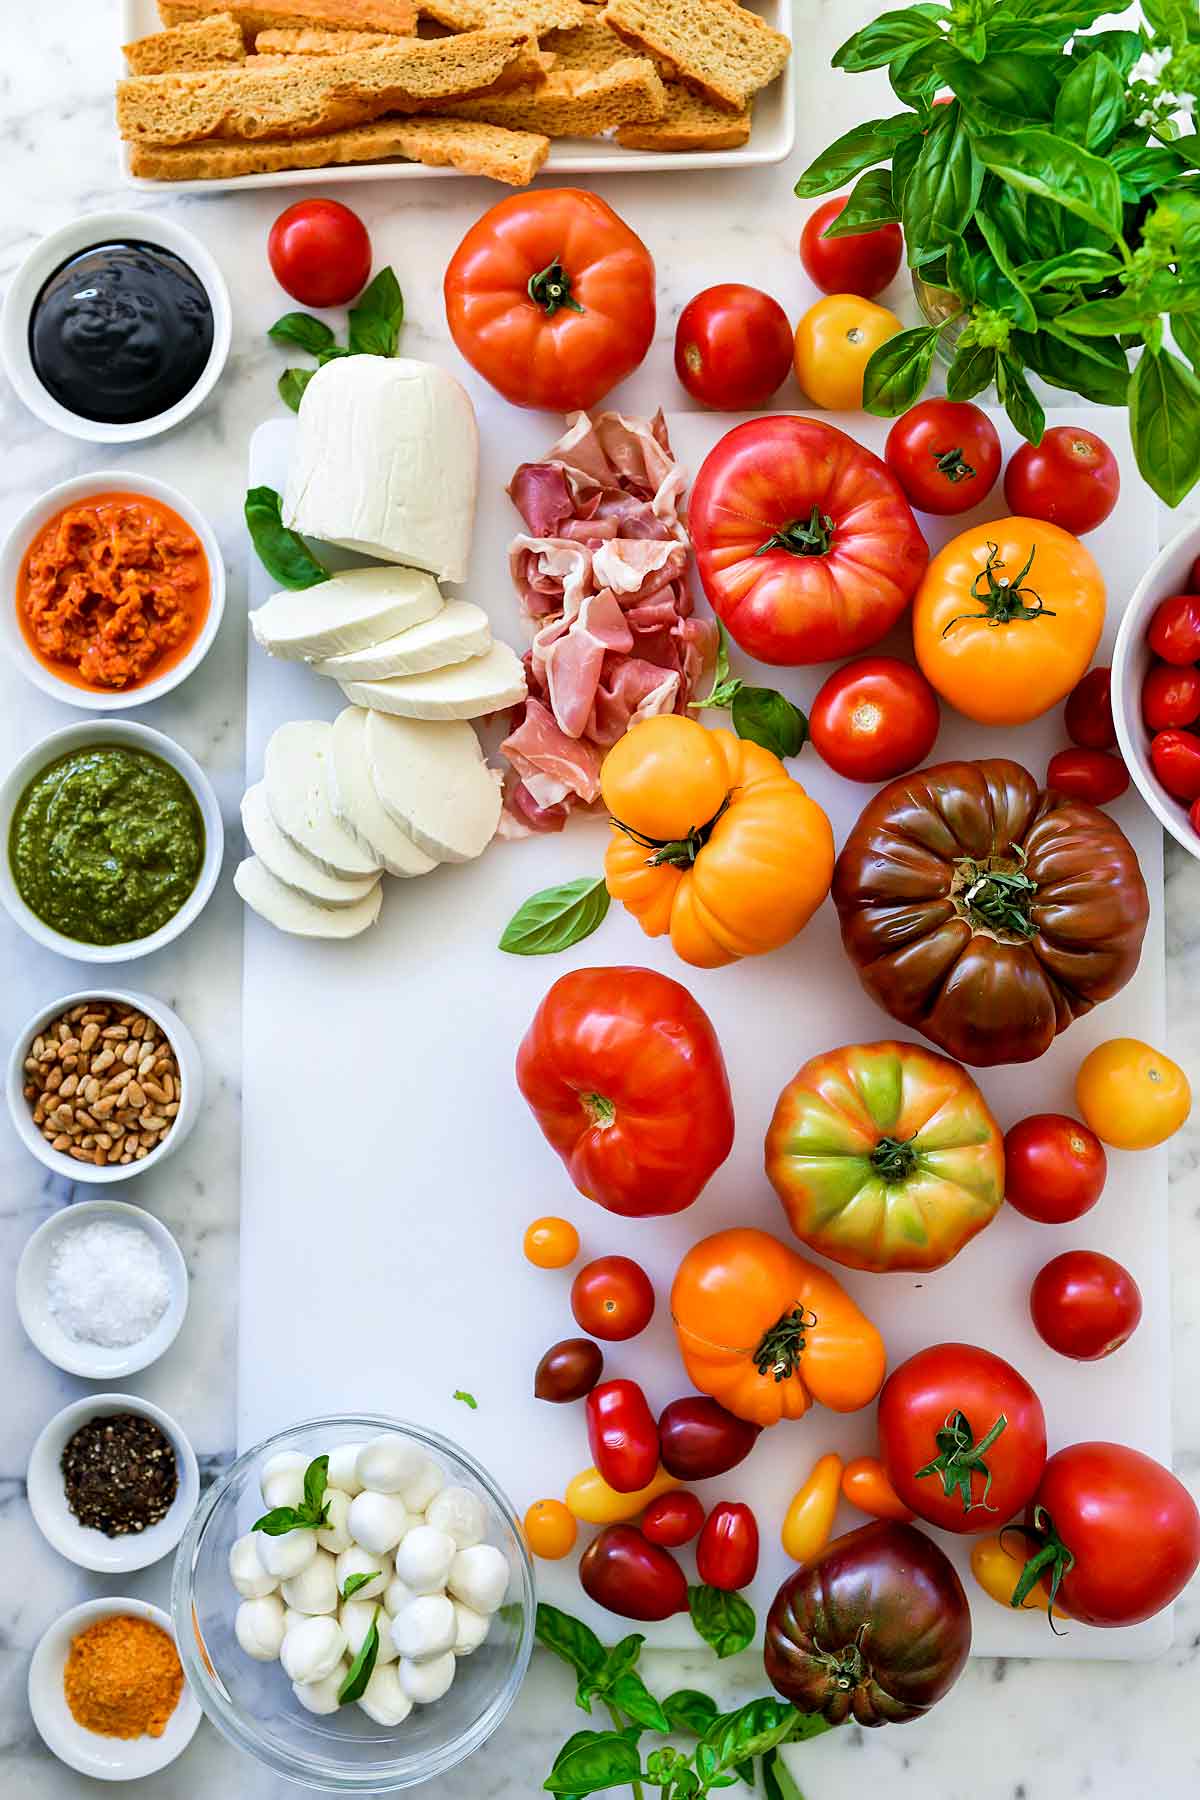 https://www.foodiecrush.com/wp-content/uploads/2019/07/Caprese-Tomato-Salad-Bar-foodiecrush.com-001.jpg